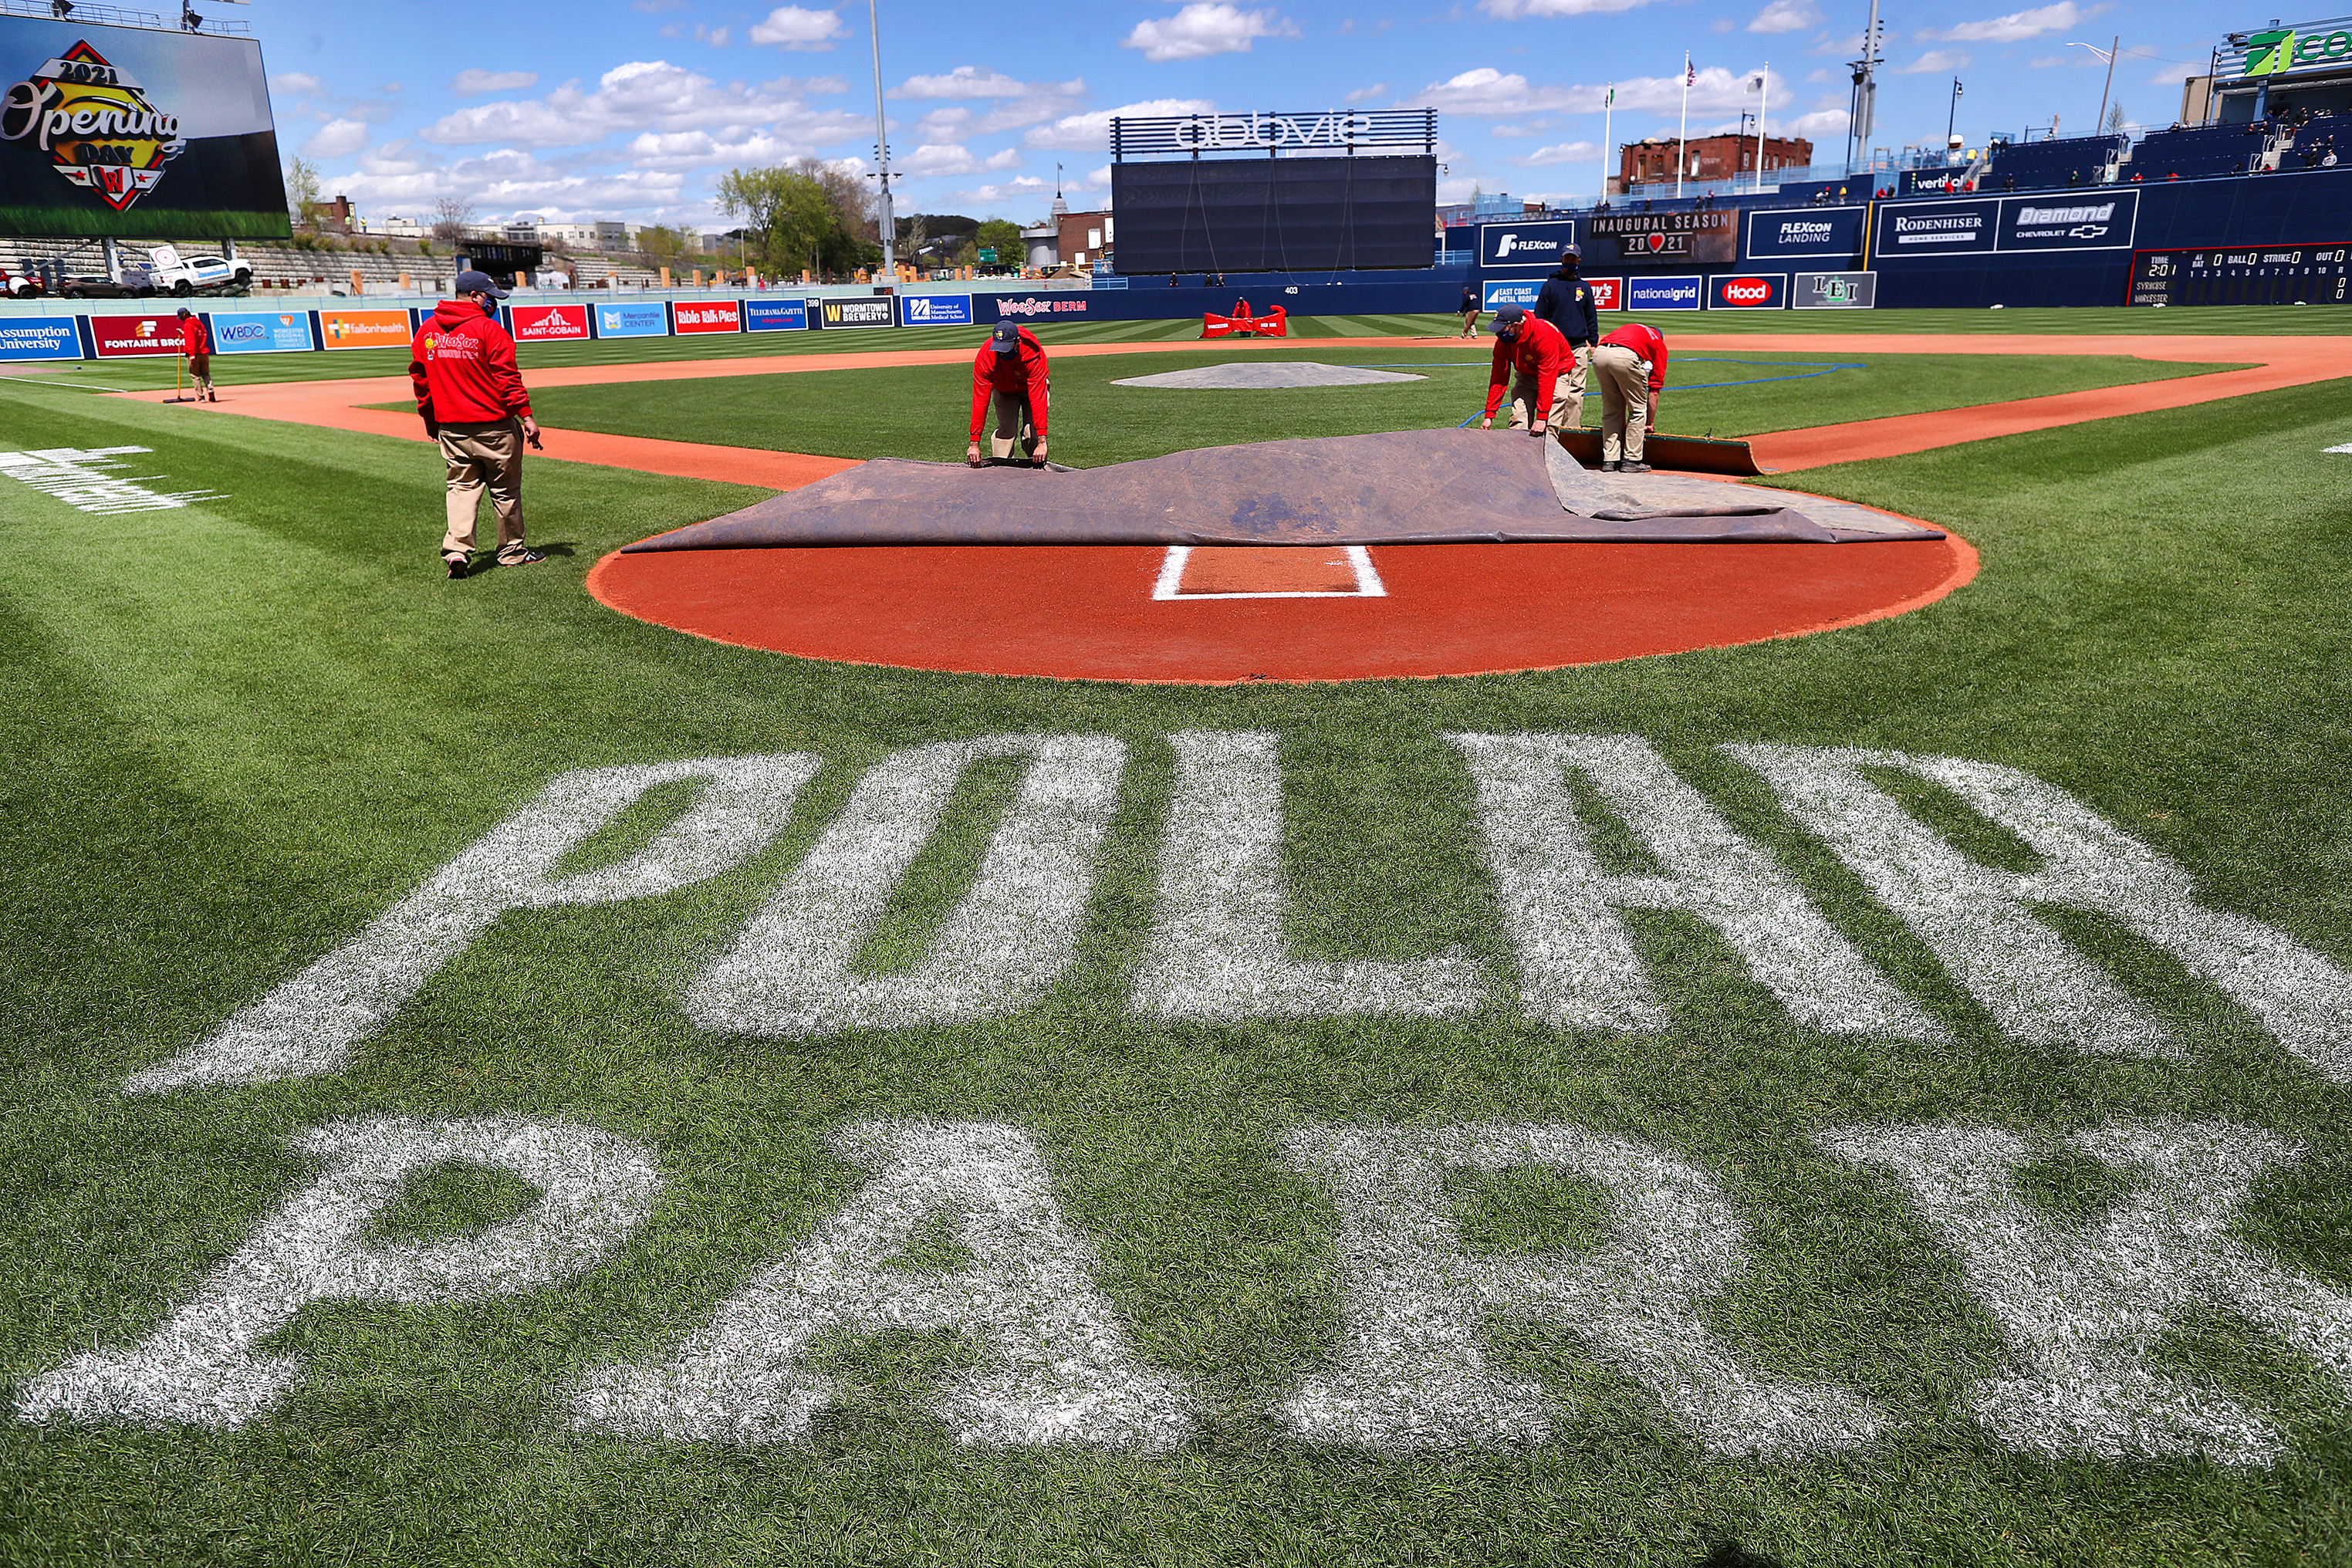 Minor league season delayed, but Polar Park will host baseball